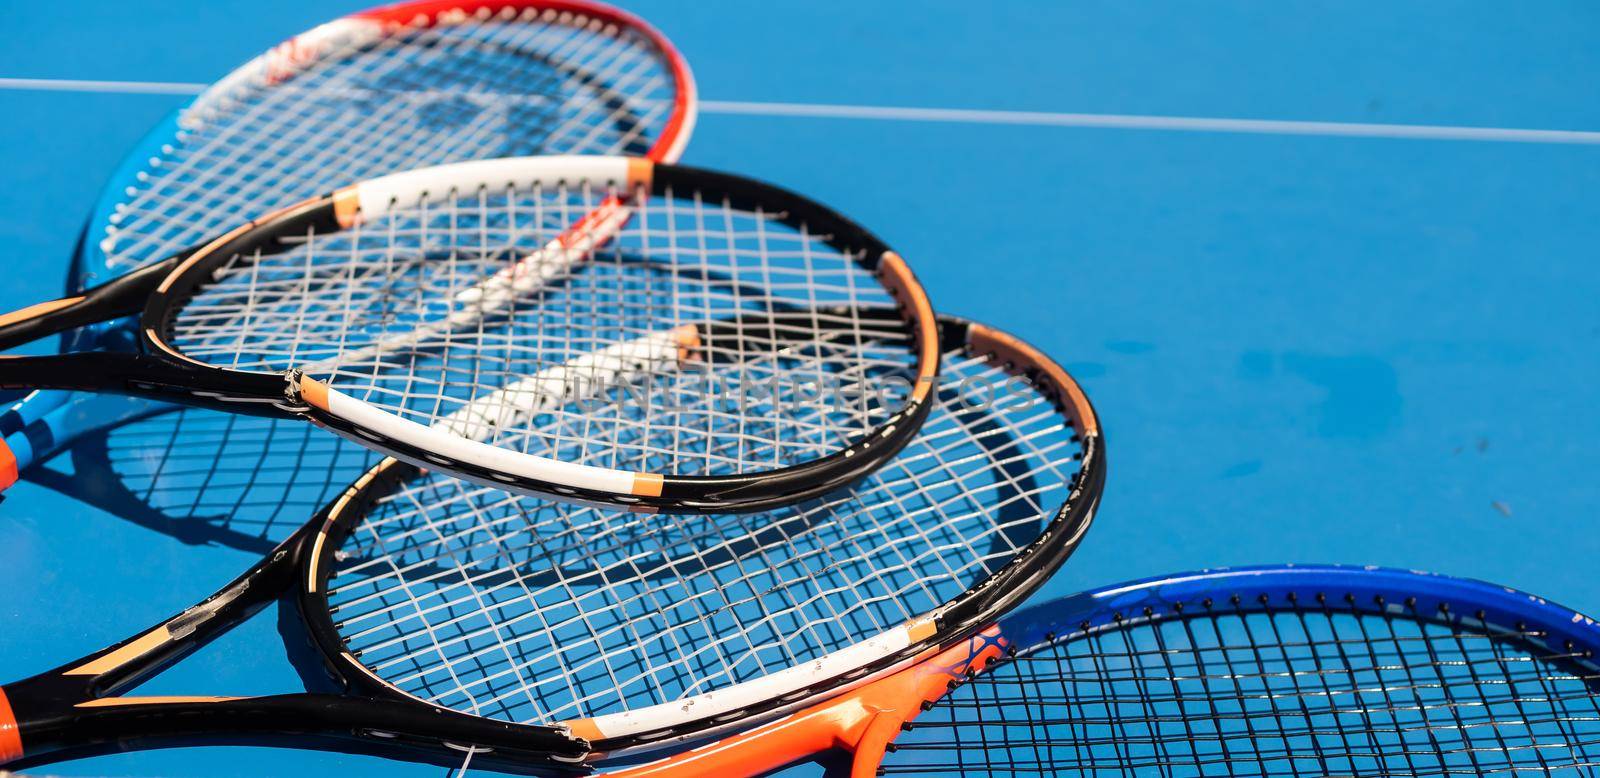 broken tennis rackets on clay tennis court by Andelov13